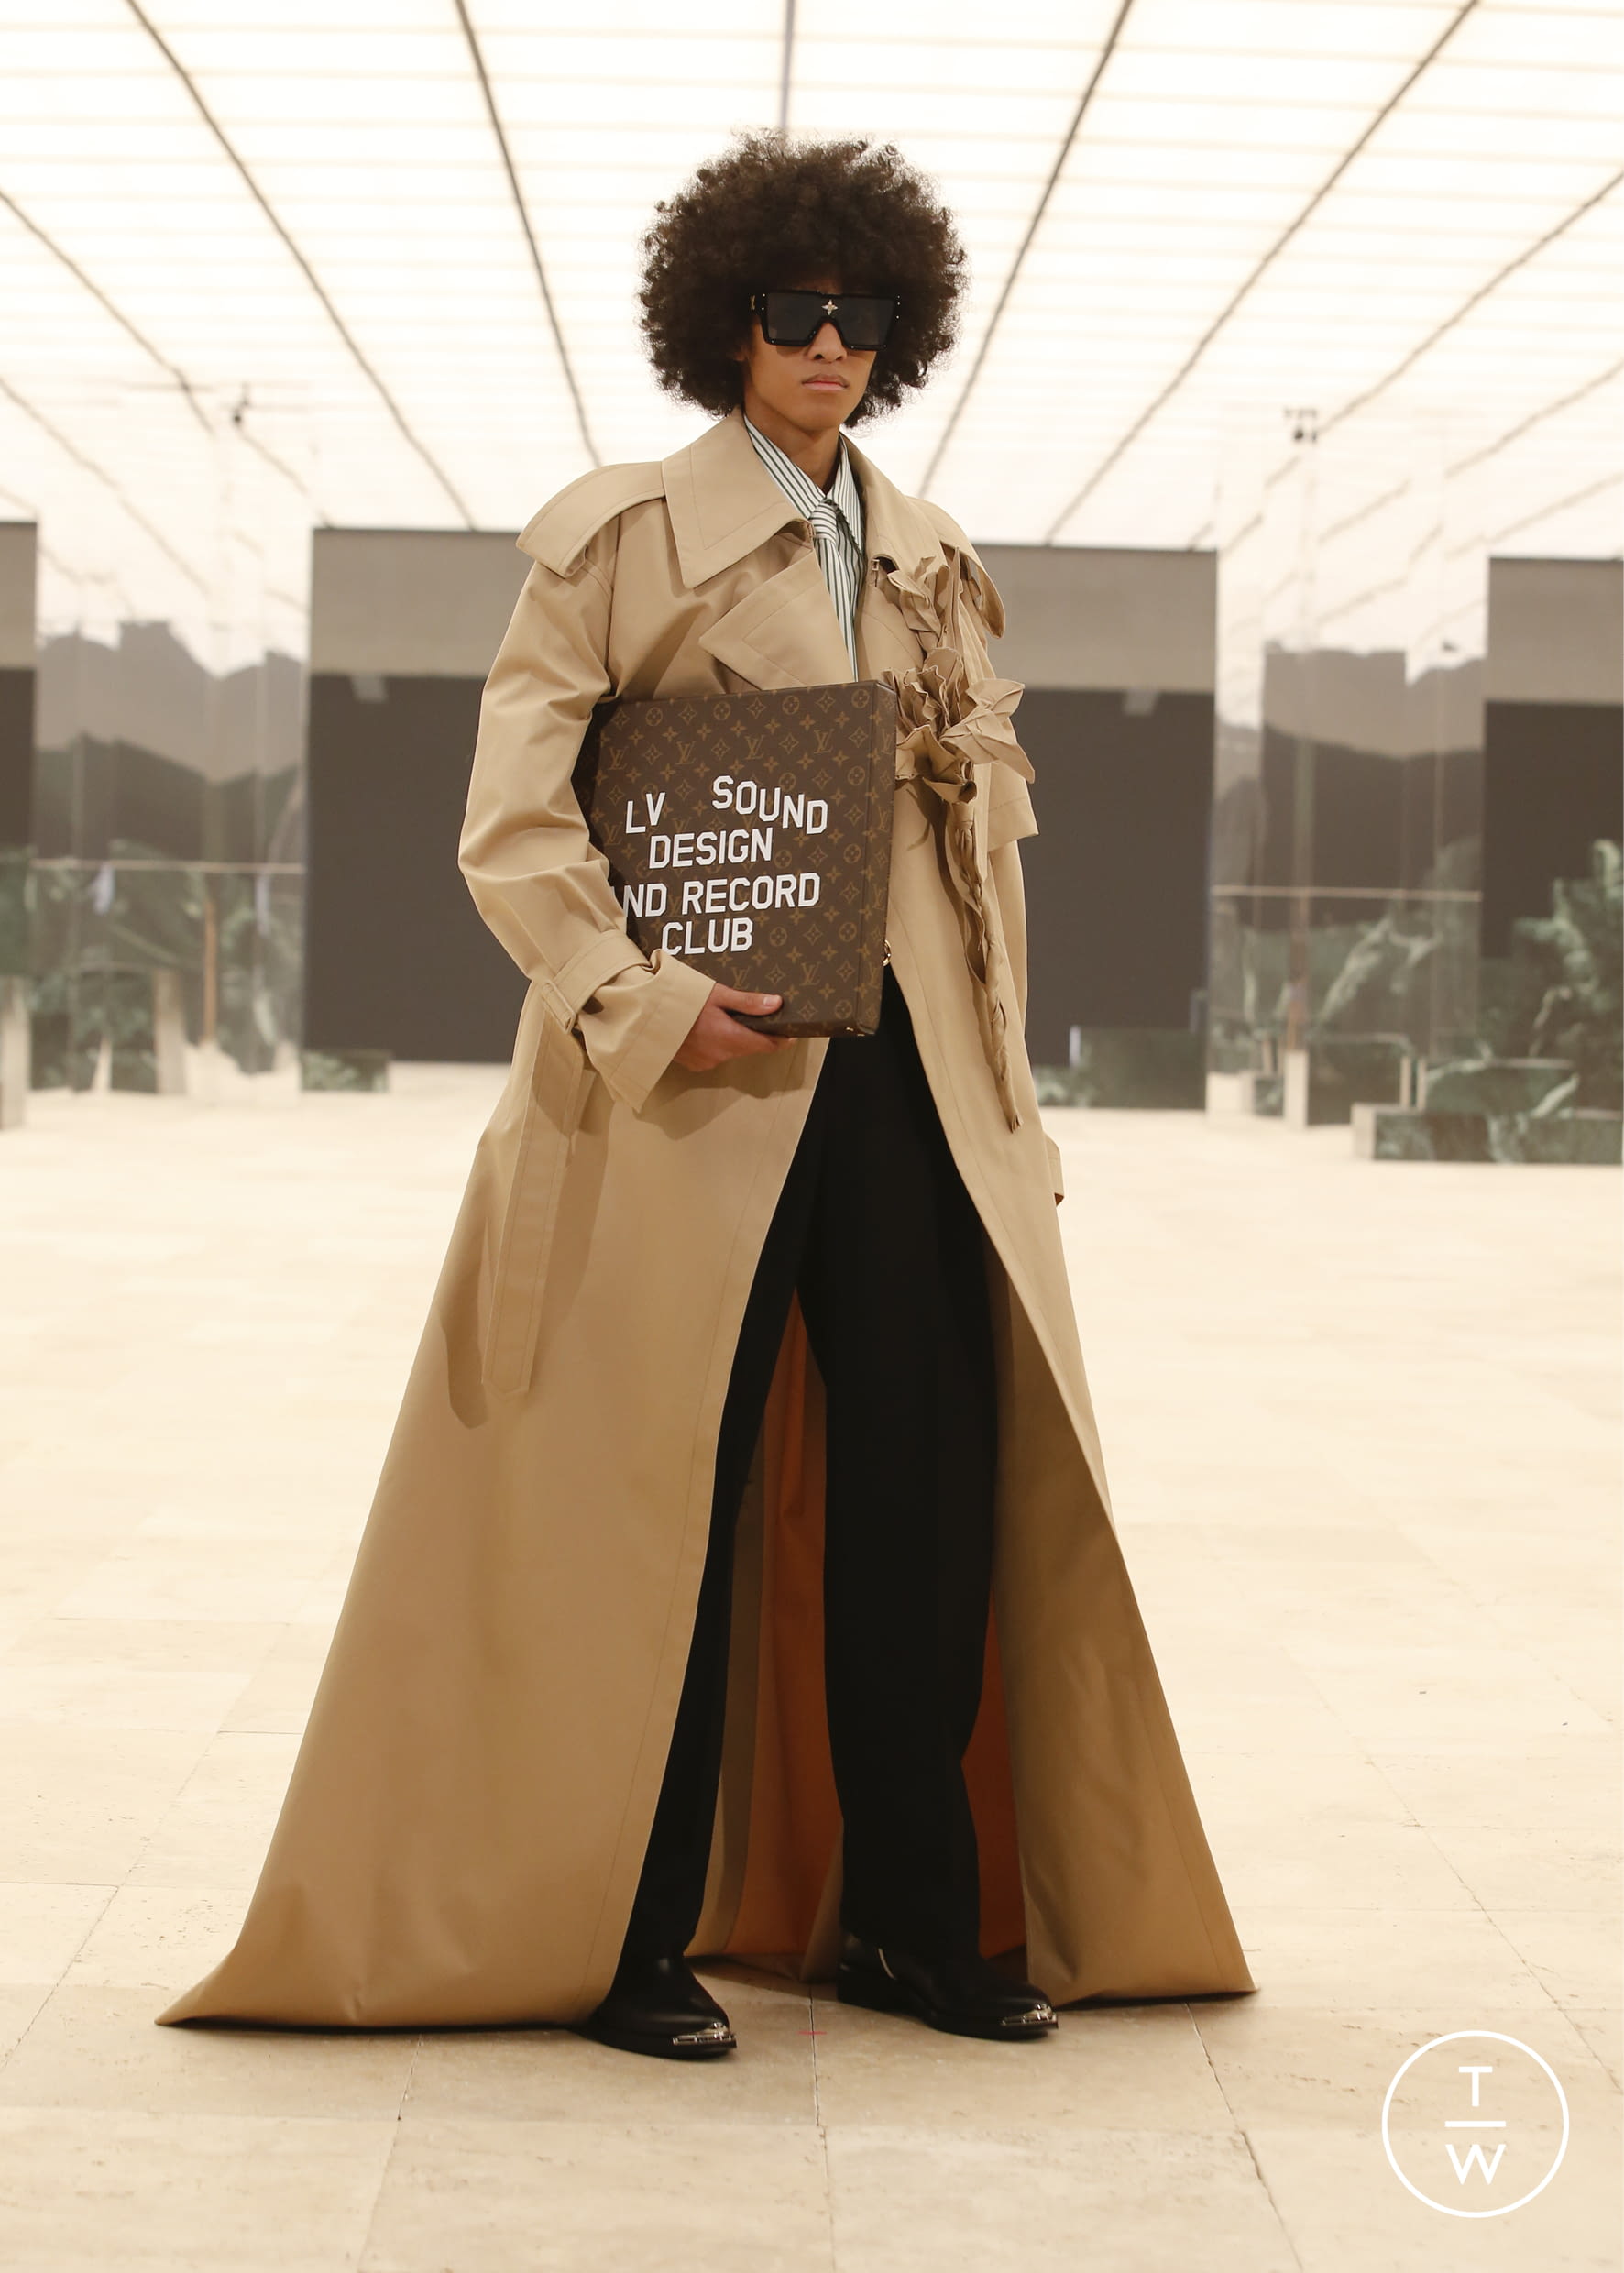 Louis Vuitton FW21 menswear #51 - Tagwalk: The Fashion Search Engine